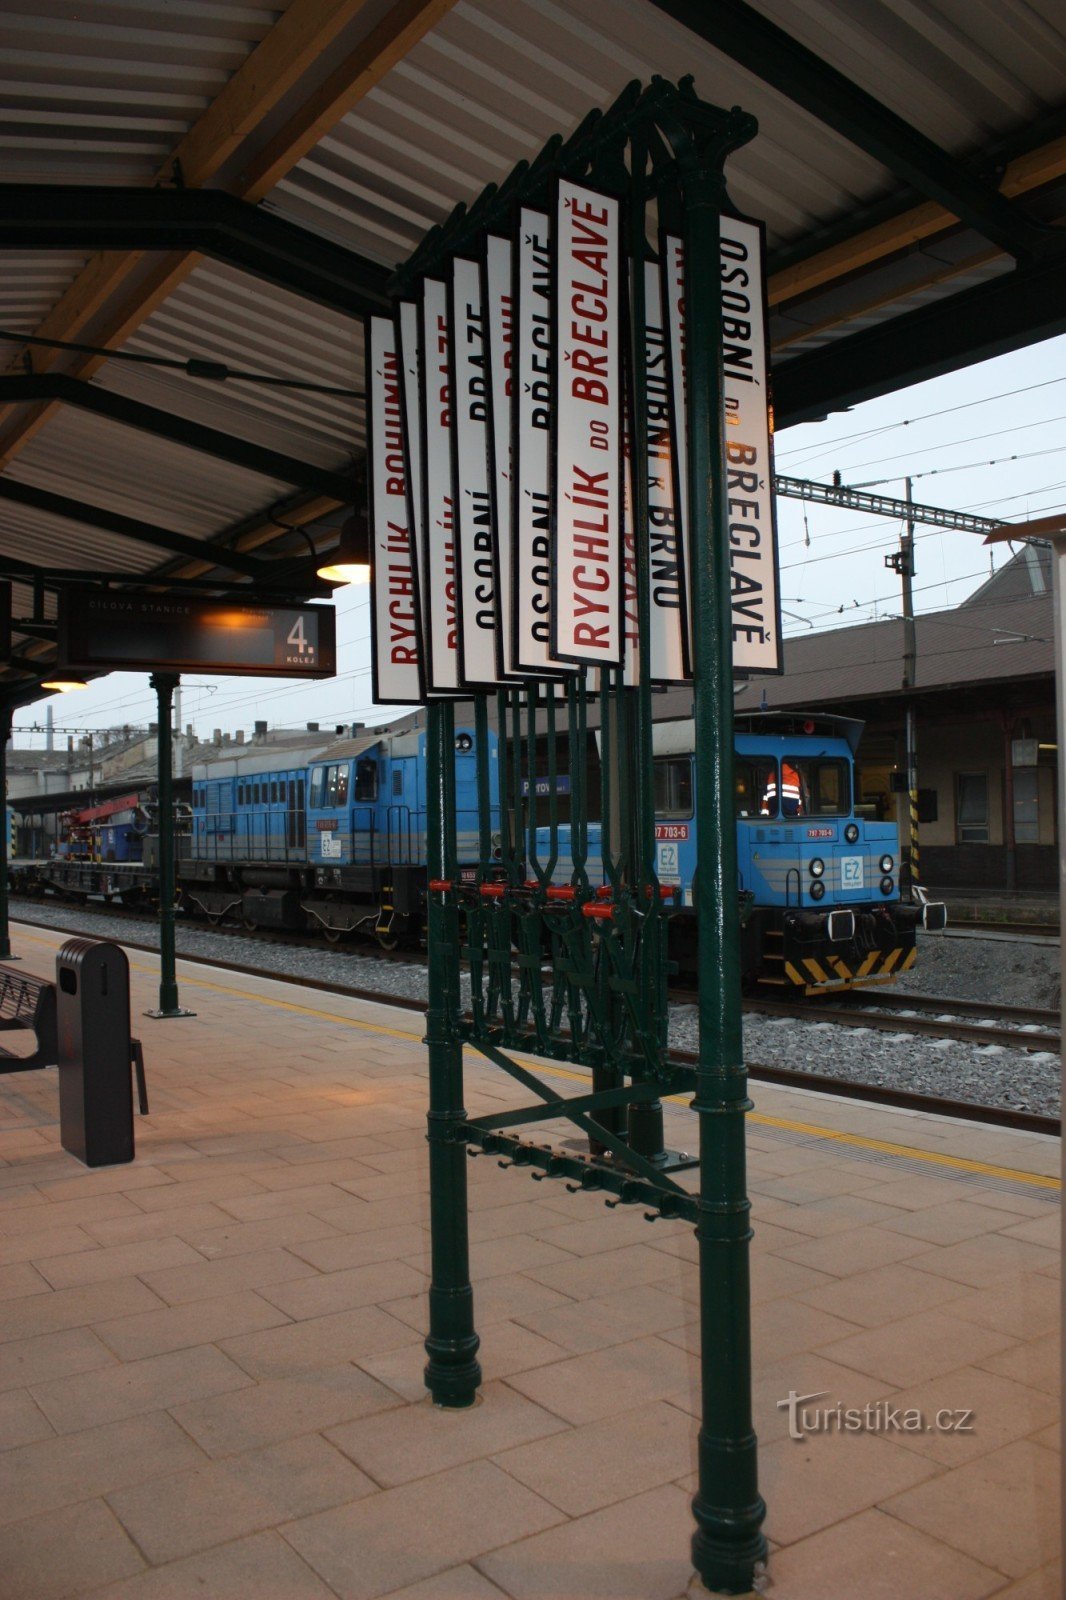 Historic platform information board on the second platform of the railway station